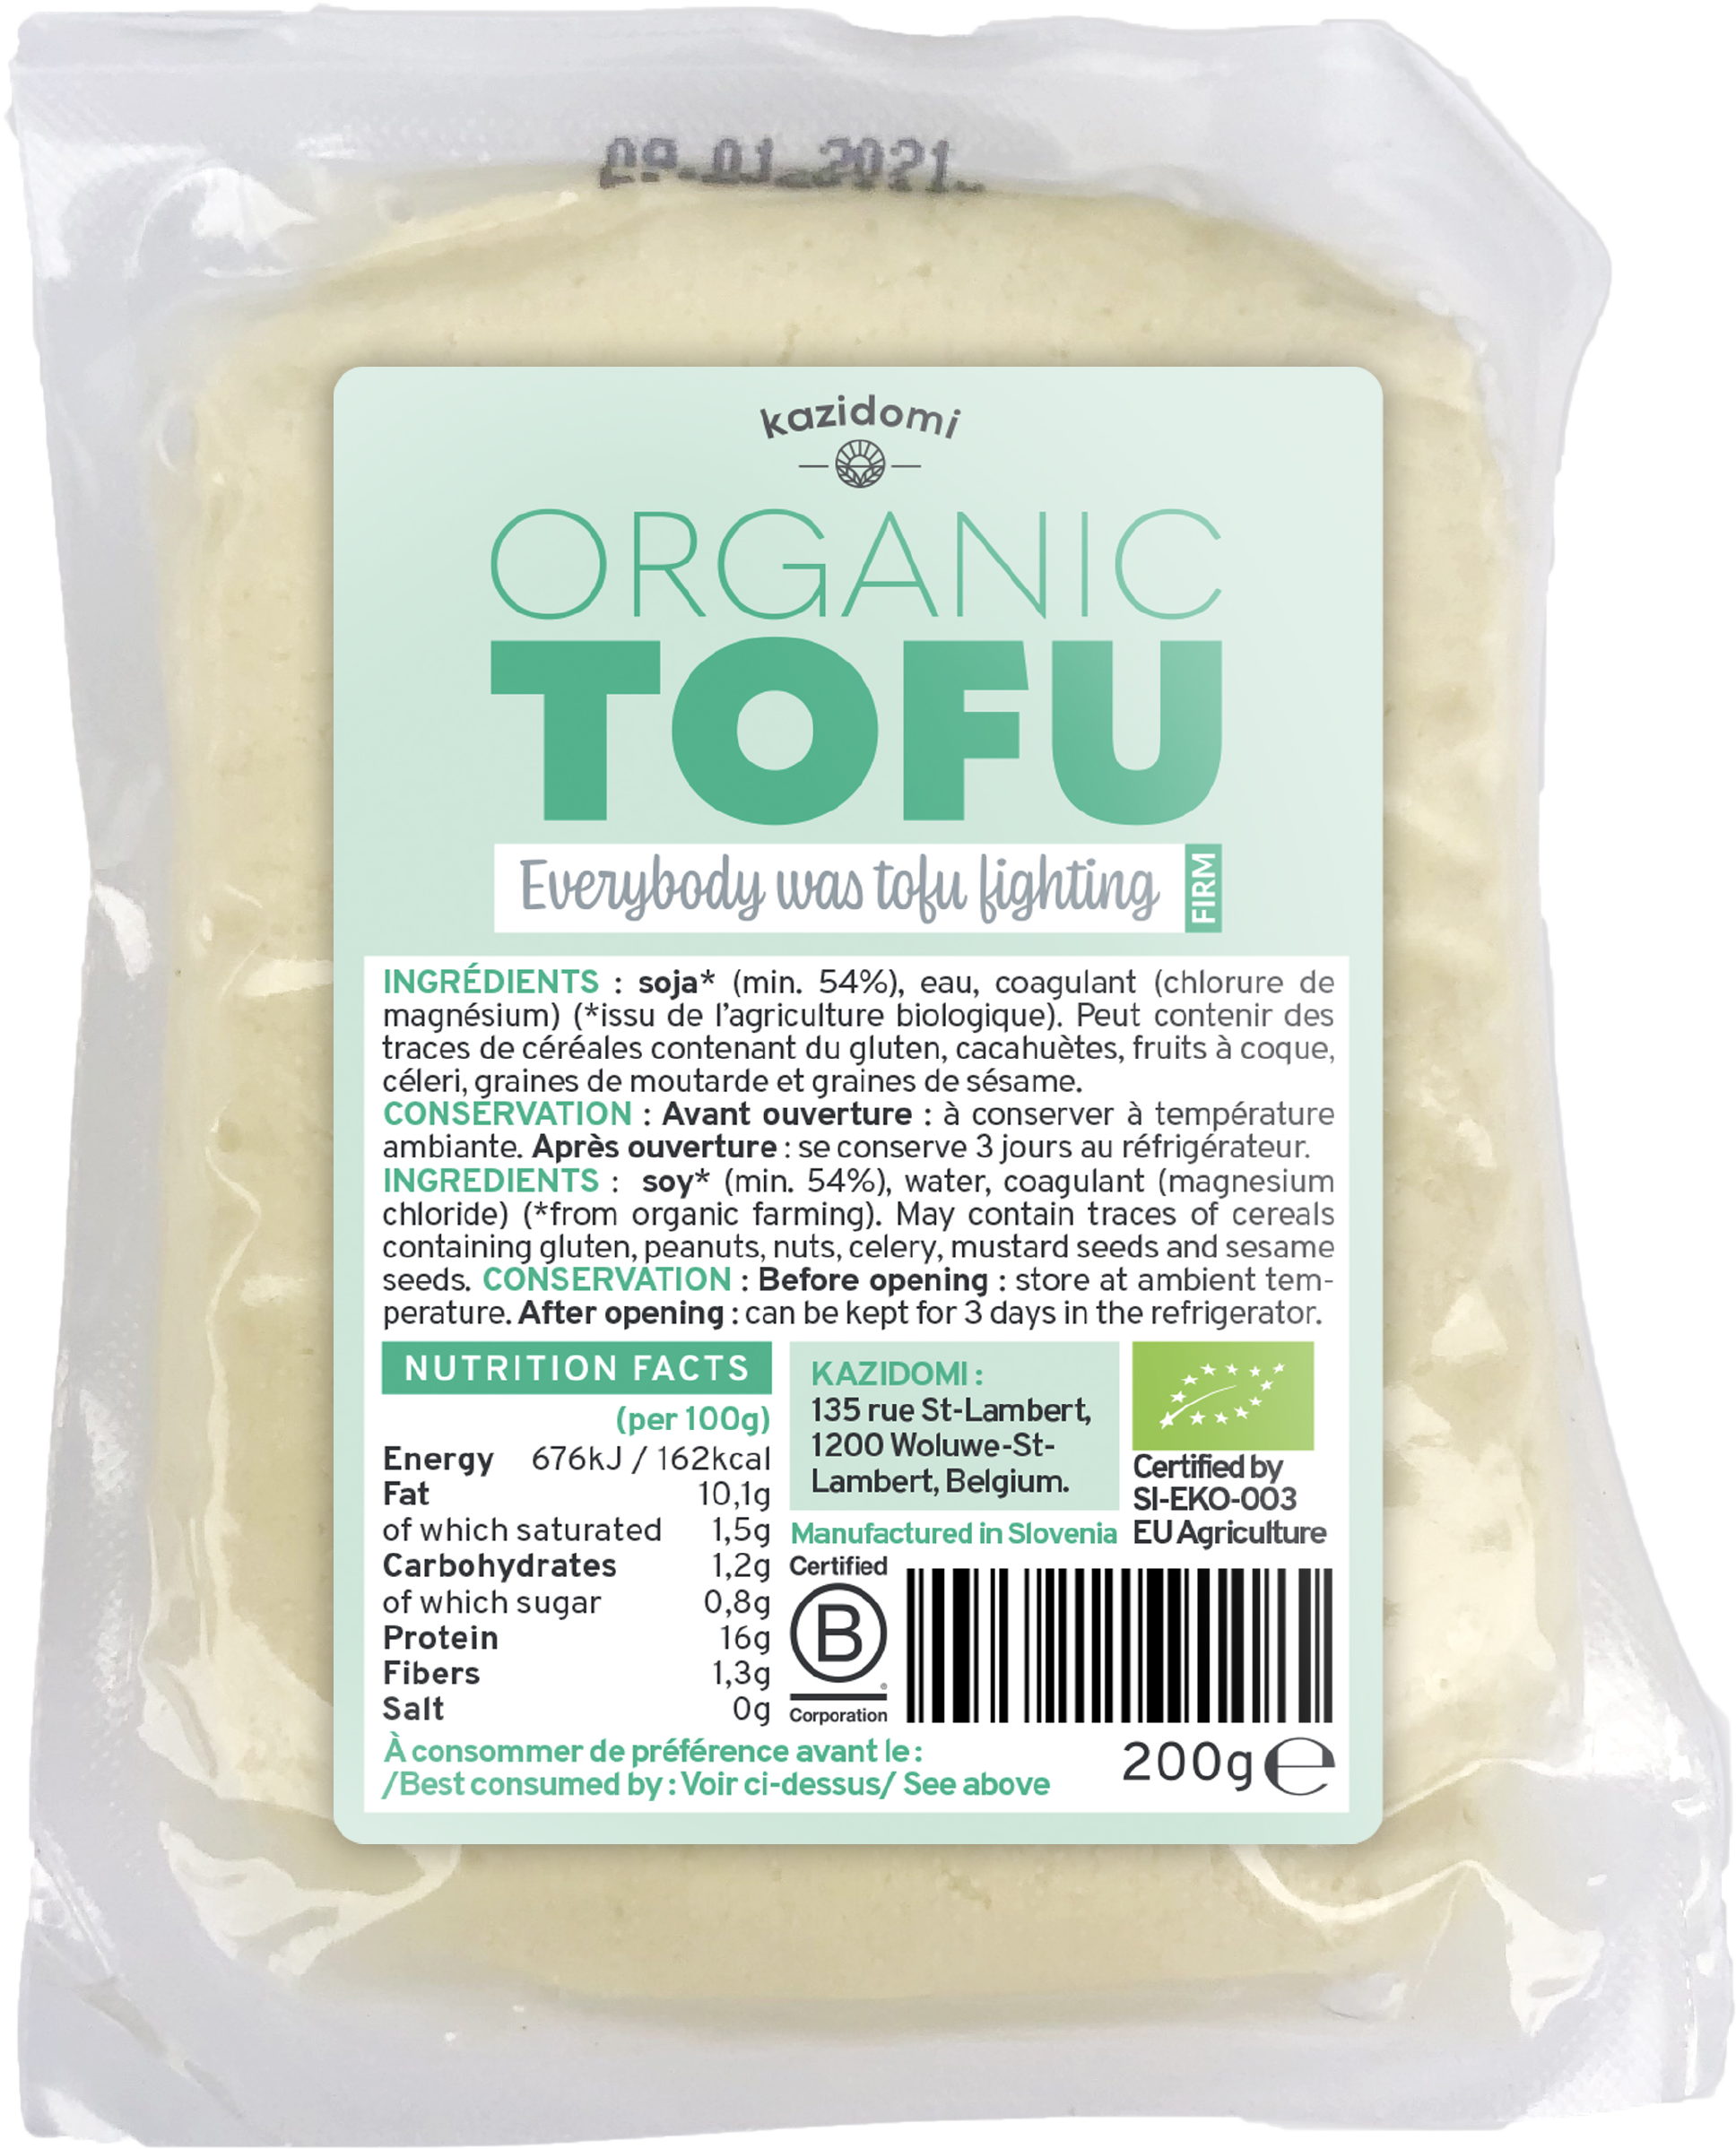 Tofu Nature Bio